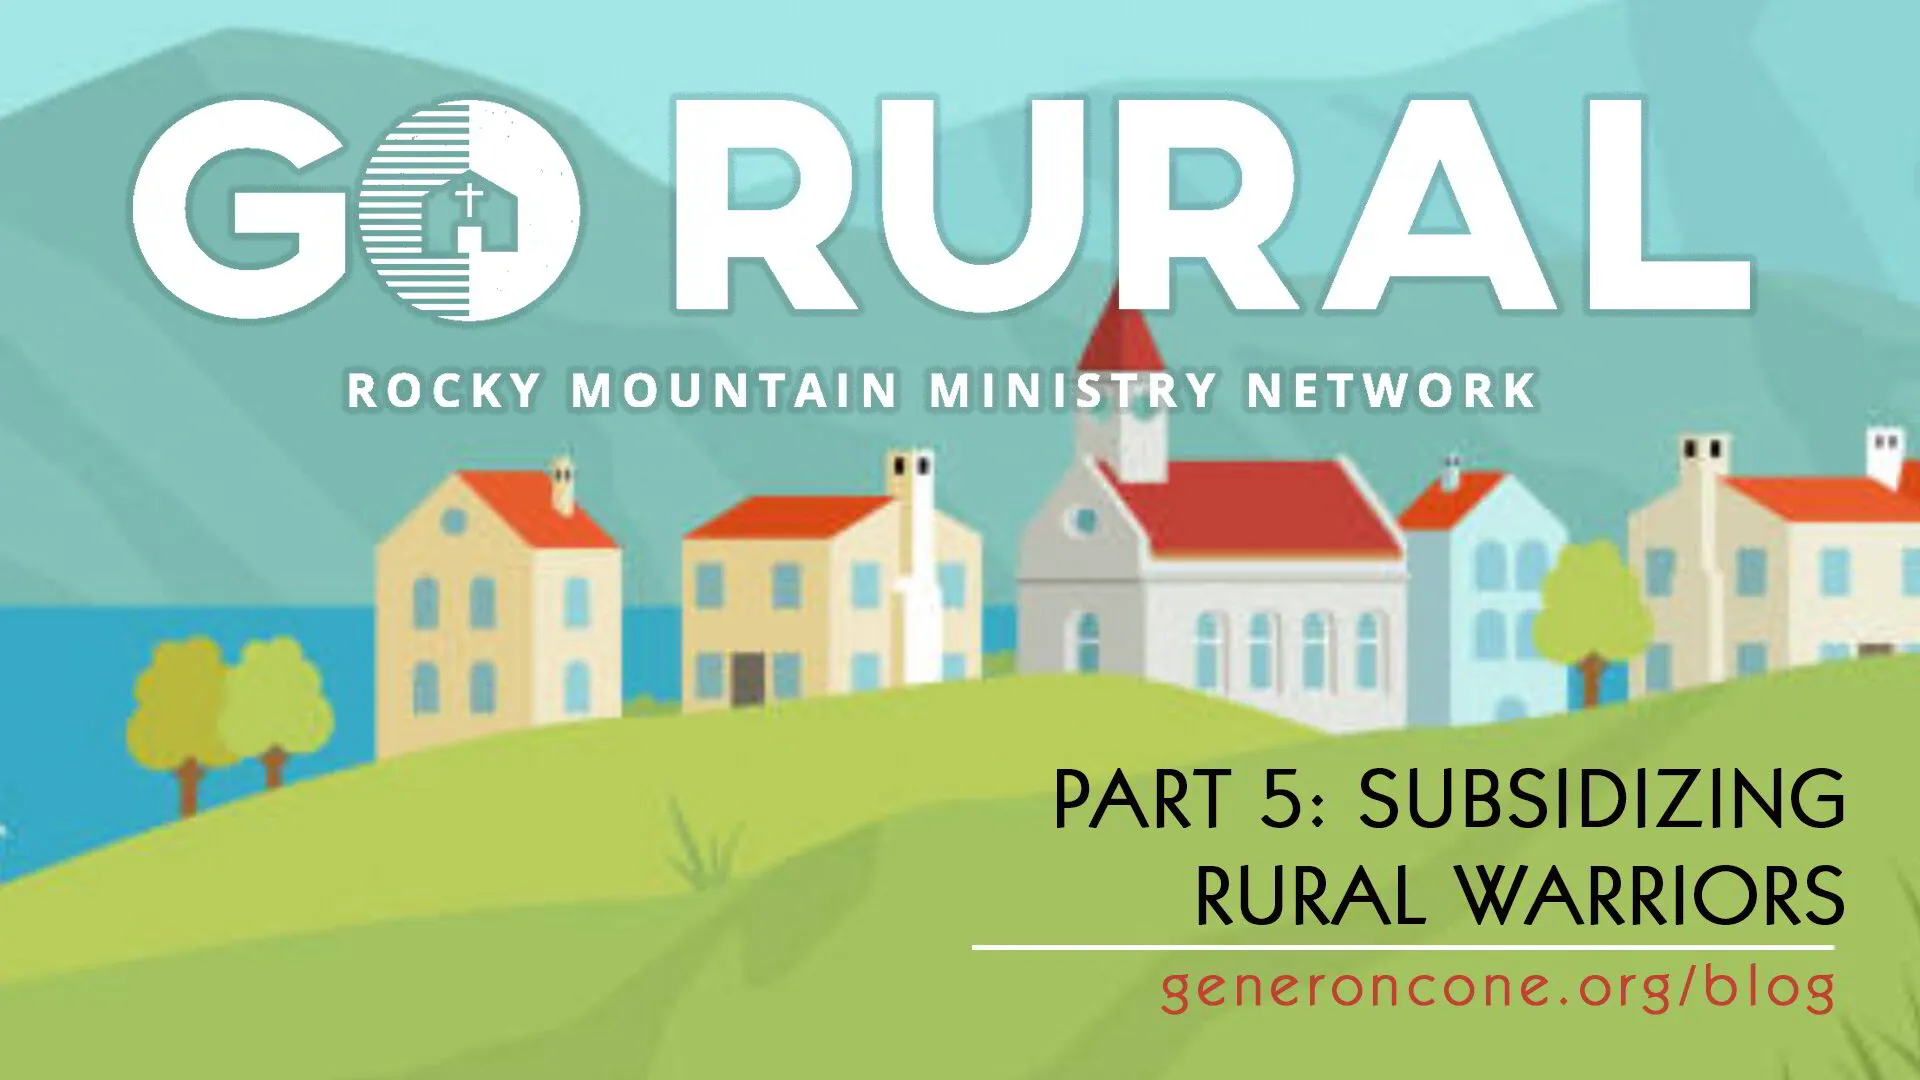 Go Rural, Part 5: Subsidizing Rural Warriors